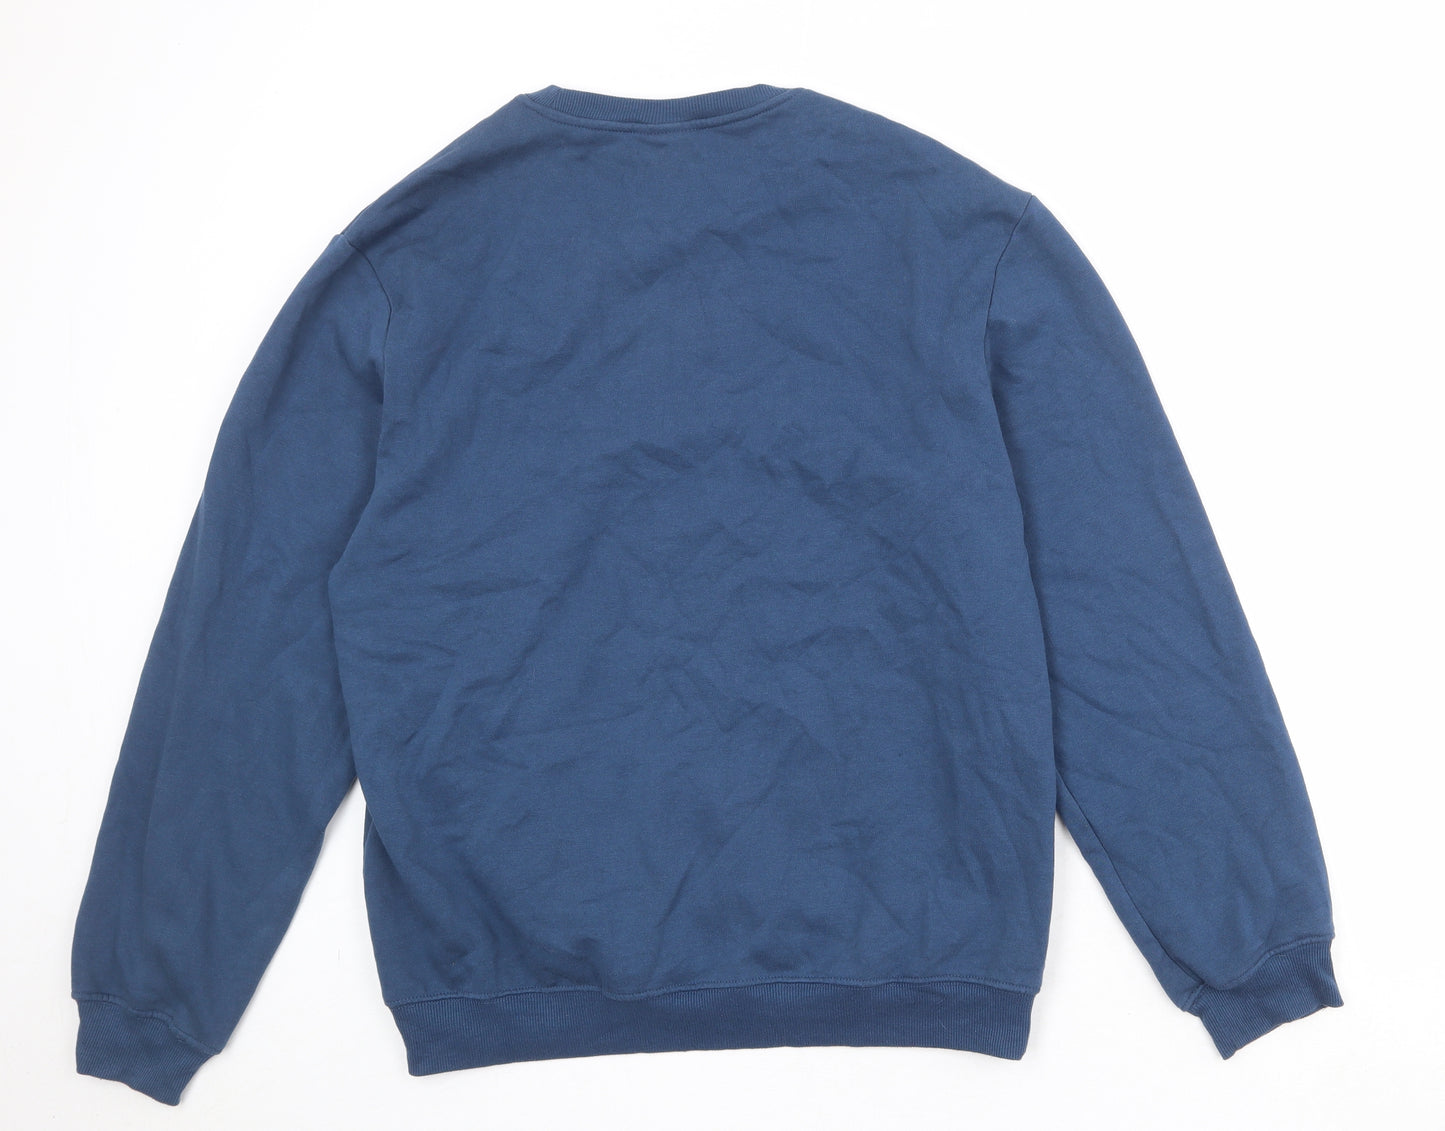 H&M Womens Blue Cotton Pullover Sweatshirt Size L Pullover